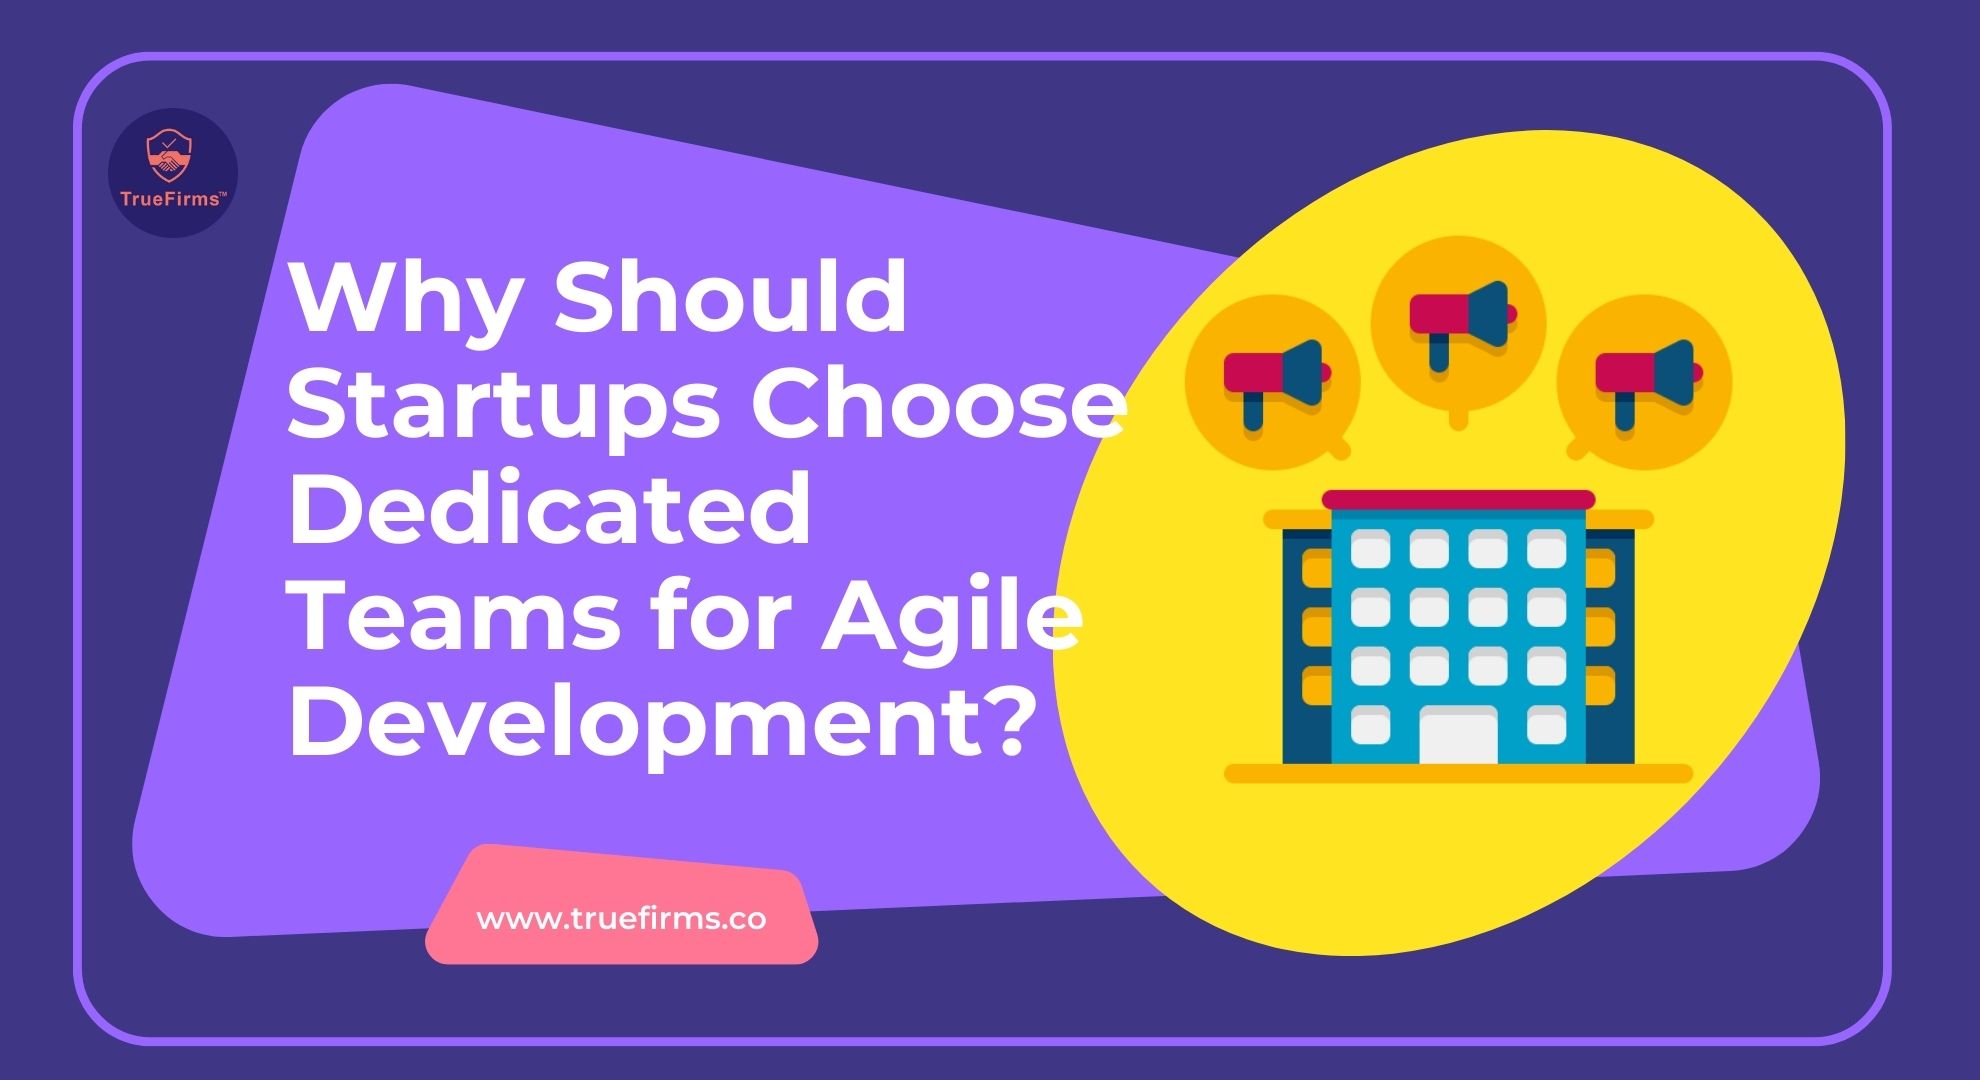 Choose Dedicated Teams for Agile Development